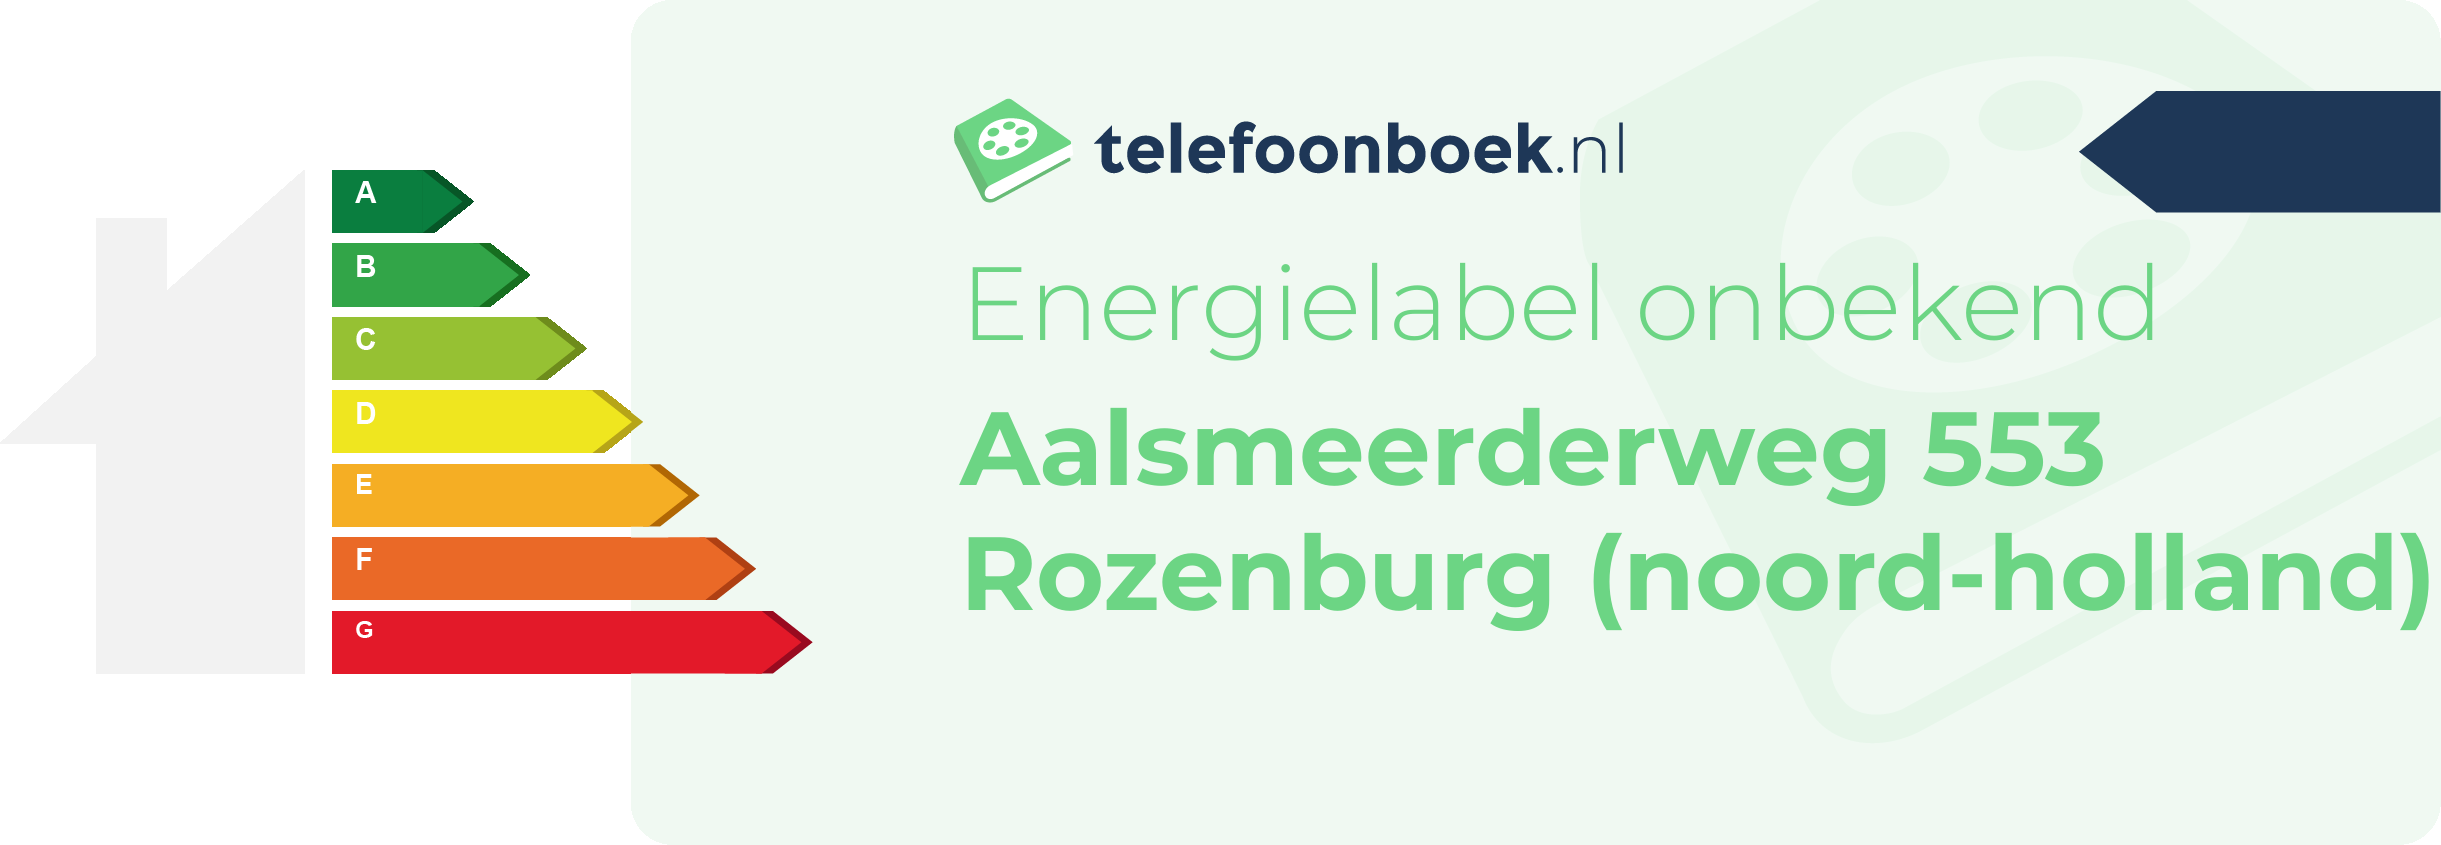 Energielabel Aalsmeerderweg 553 Rozenburg (Noord-Holland)